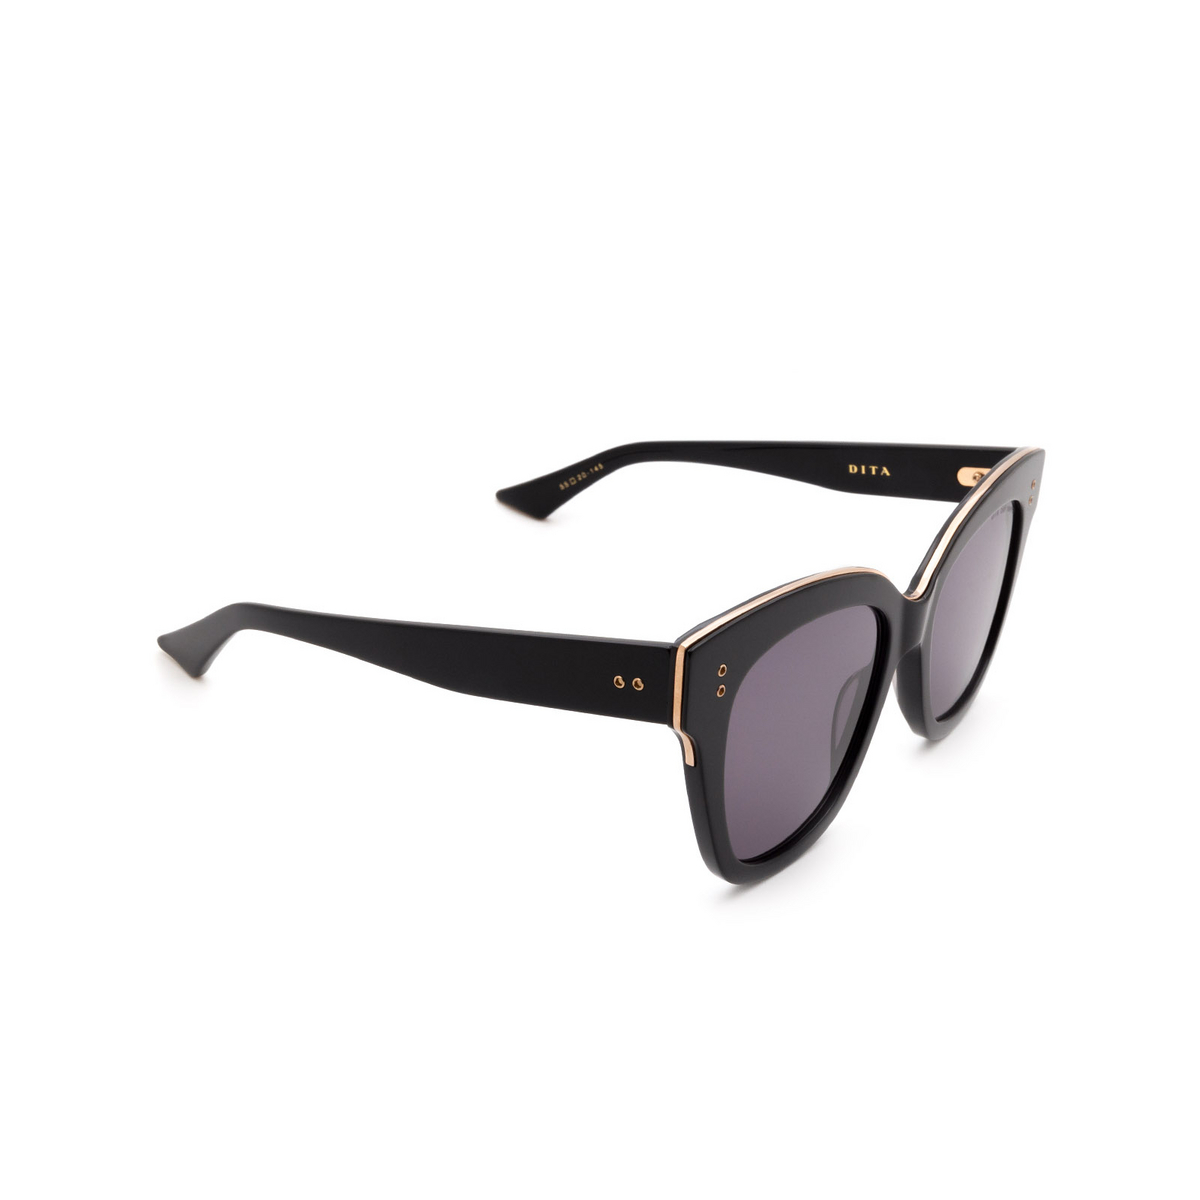 Dita® Sunglasses: Day Tripper 22031-E color Black / Rose Gold Blk-rgd - front view.